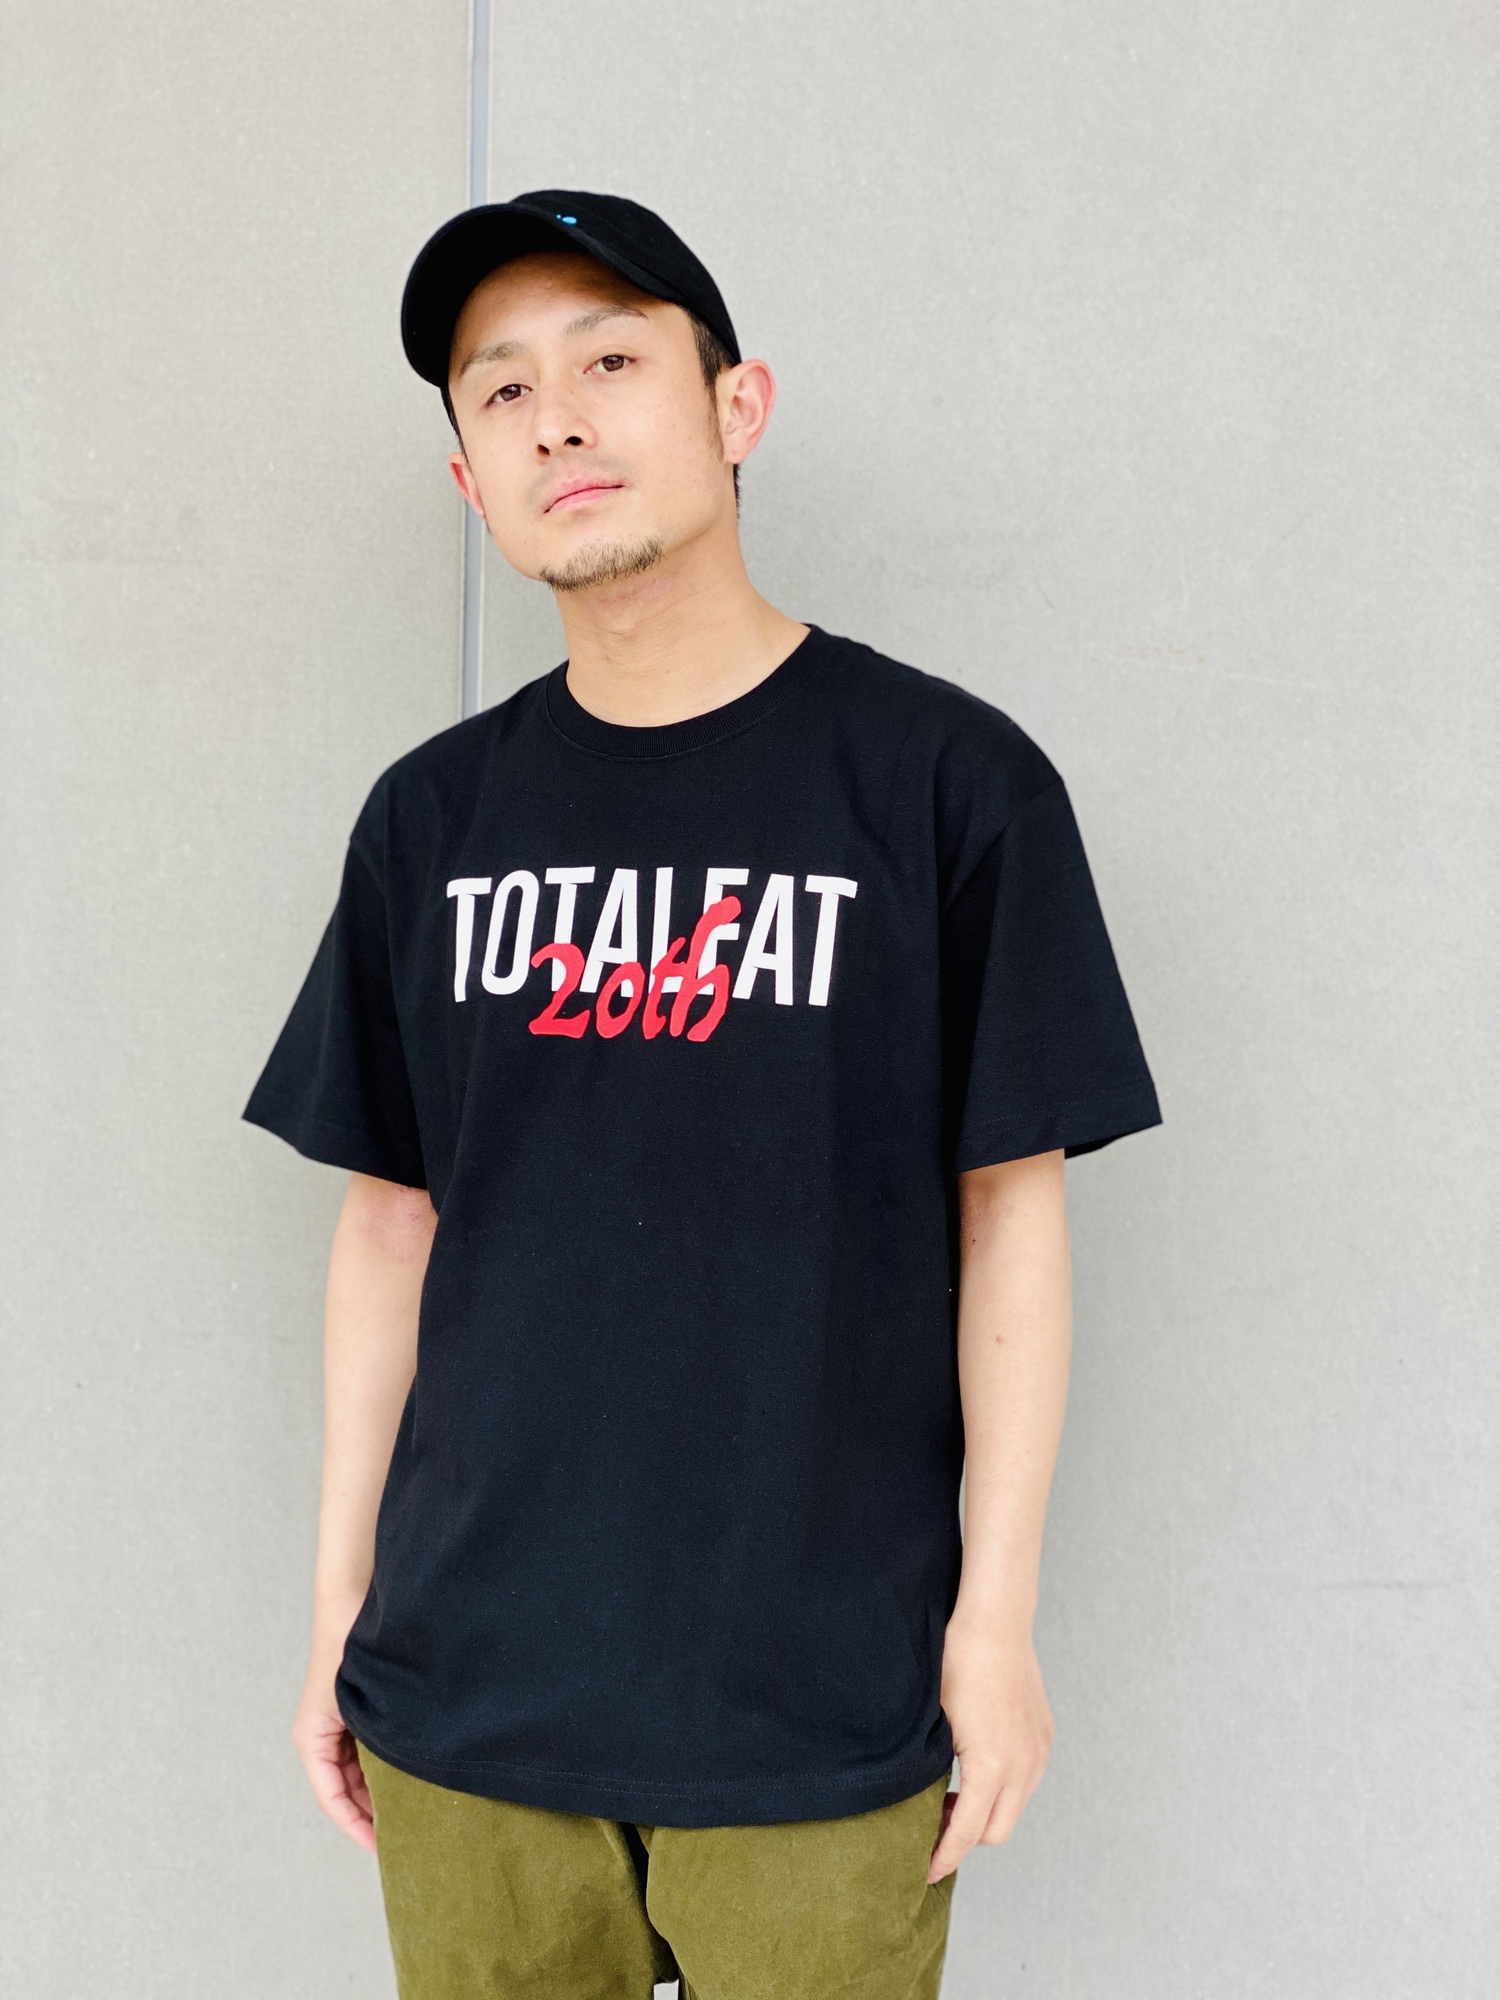 TOTALFAT 20th Anniversary「Smile Baby Smile」Tシャツ限定受注販売開始！ | TOTALFAT